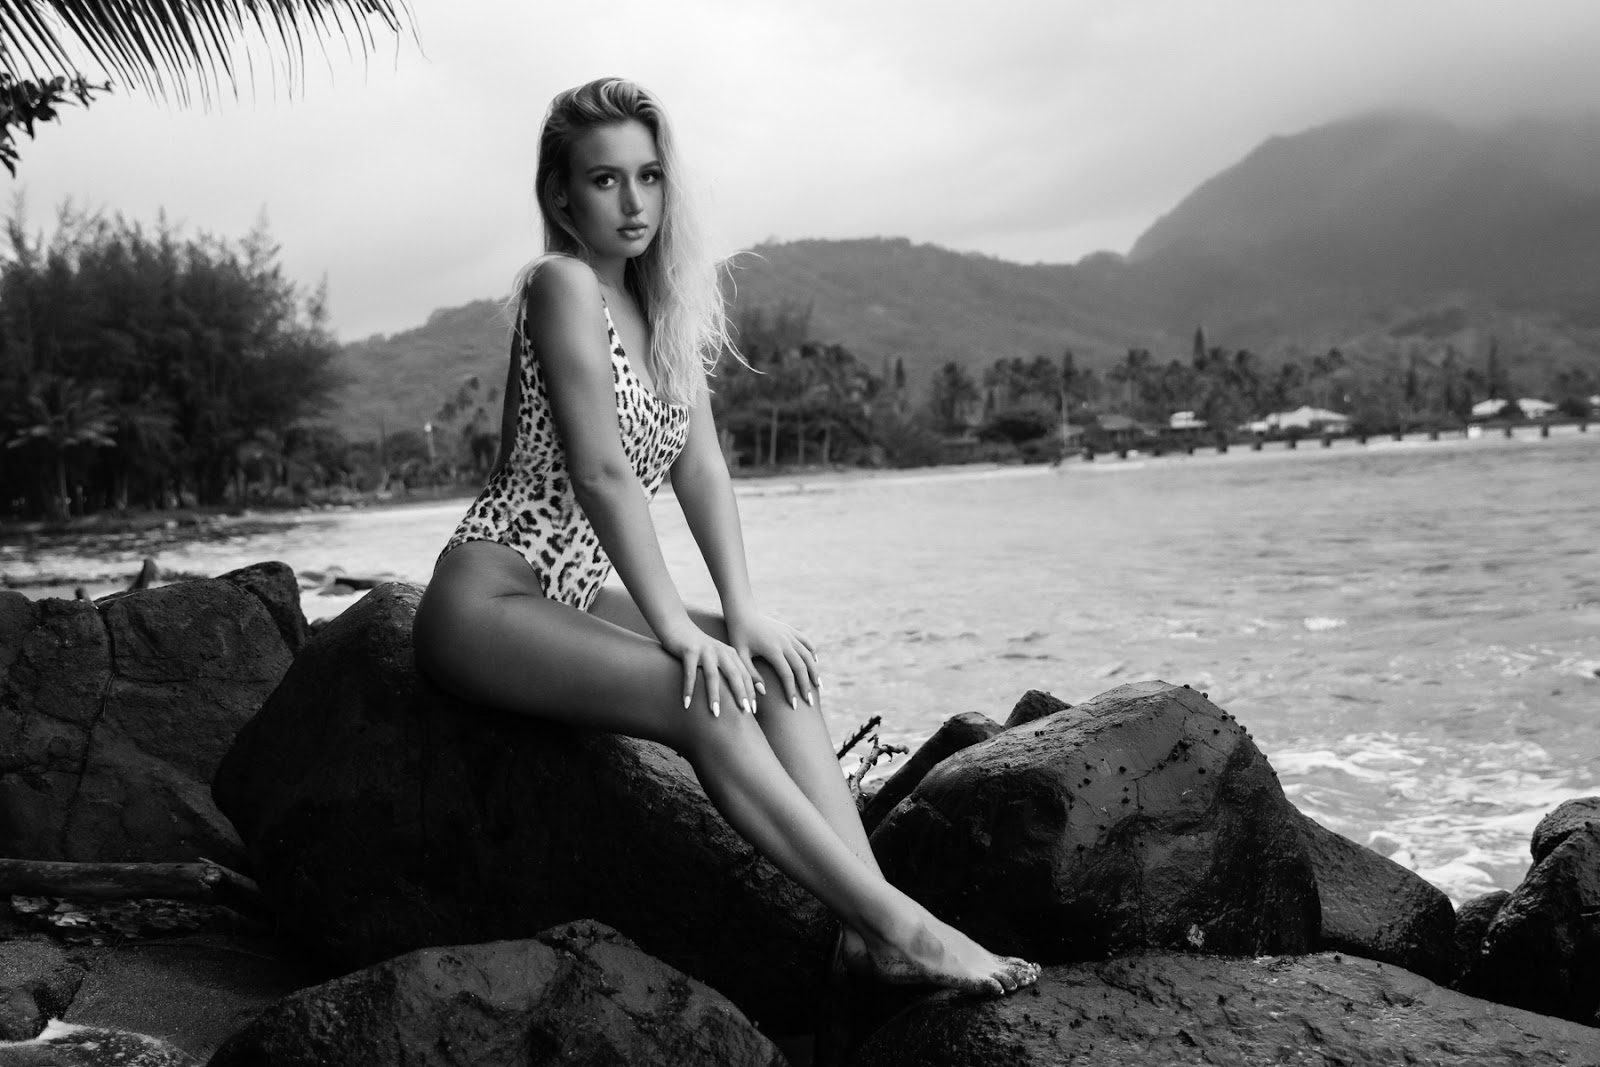 PHOTO NEWS KEITH KETCHUM Kauai Swimsuit Shoot with Julia Miller image